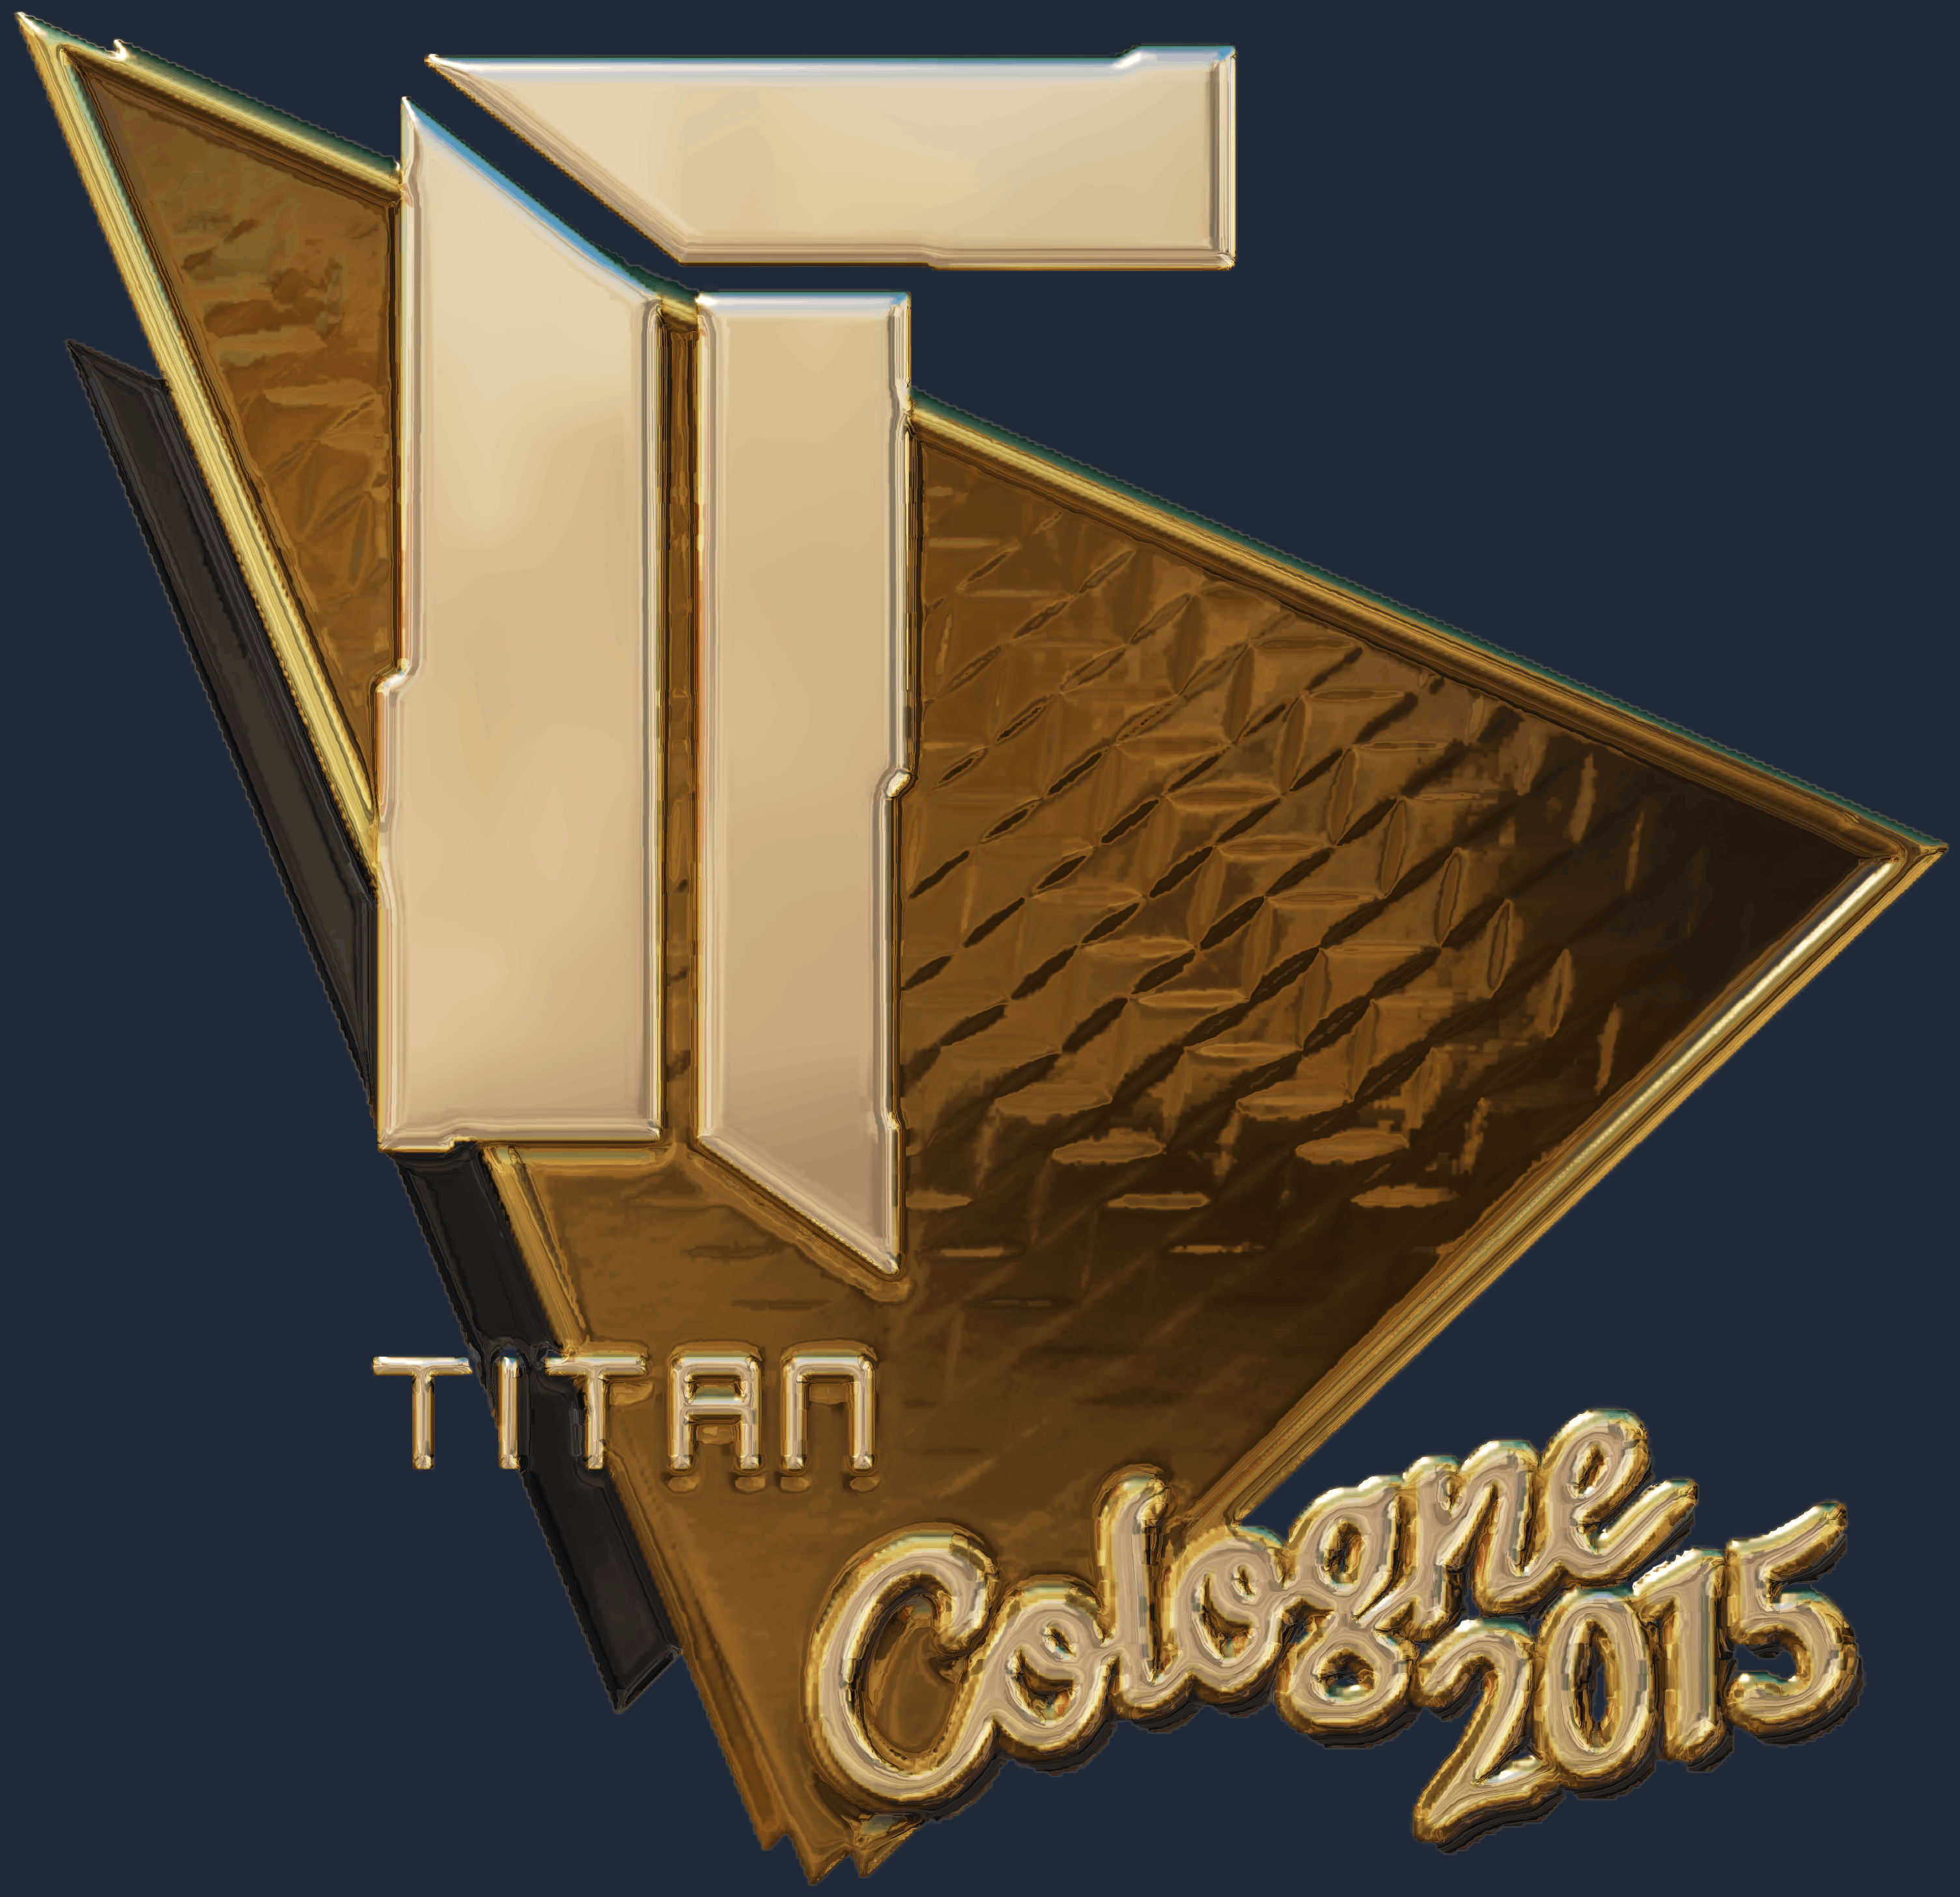 Sticker | Titan (Gold) | Cologne 2015 Screenshot